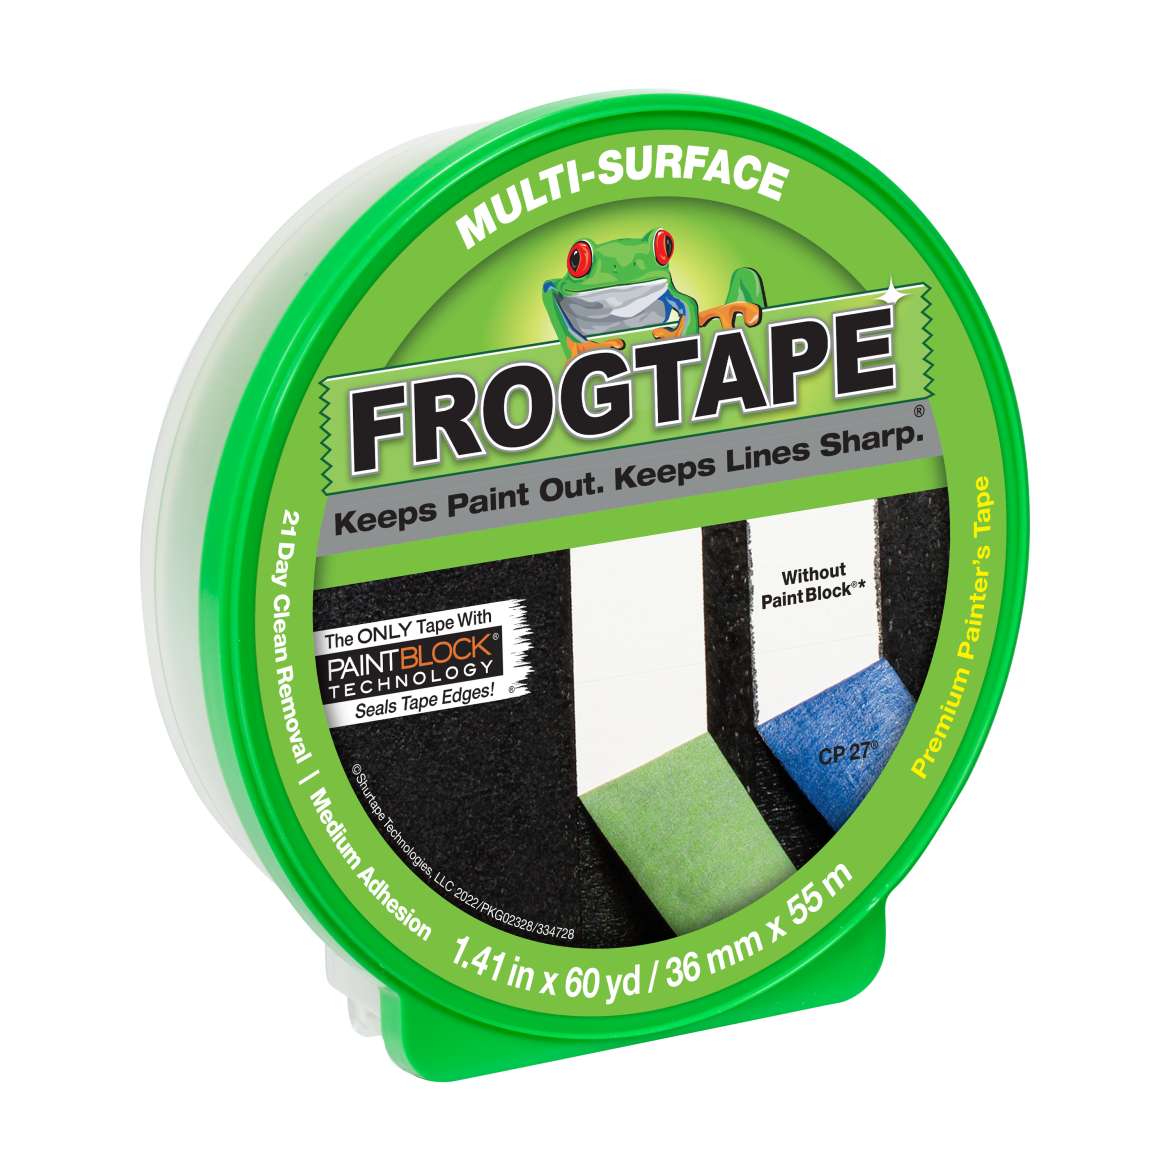 CF 120 / FrogTape® brand Painter's Tape - Multi-Surface - Frog Tape